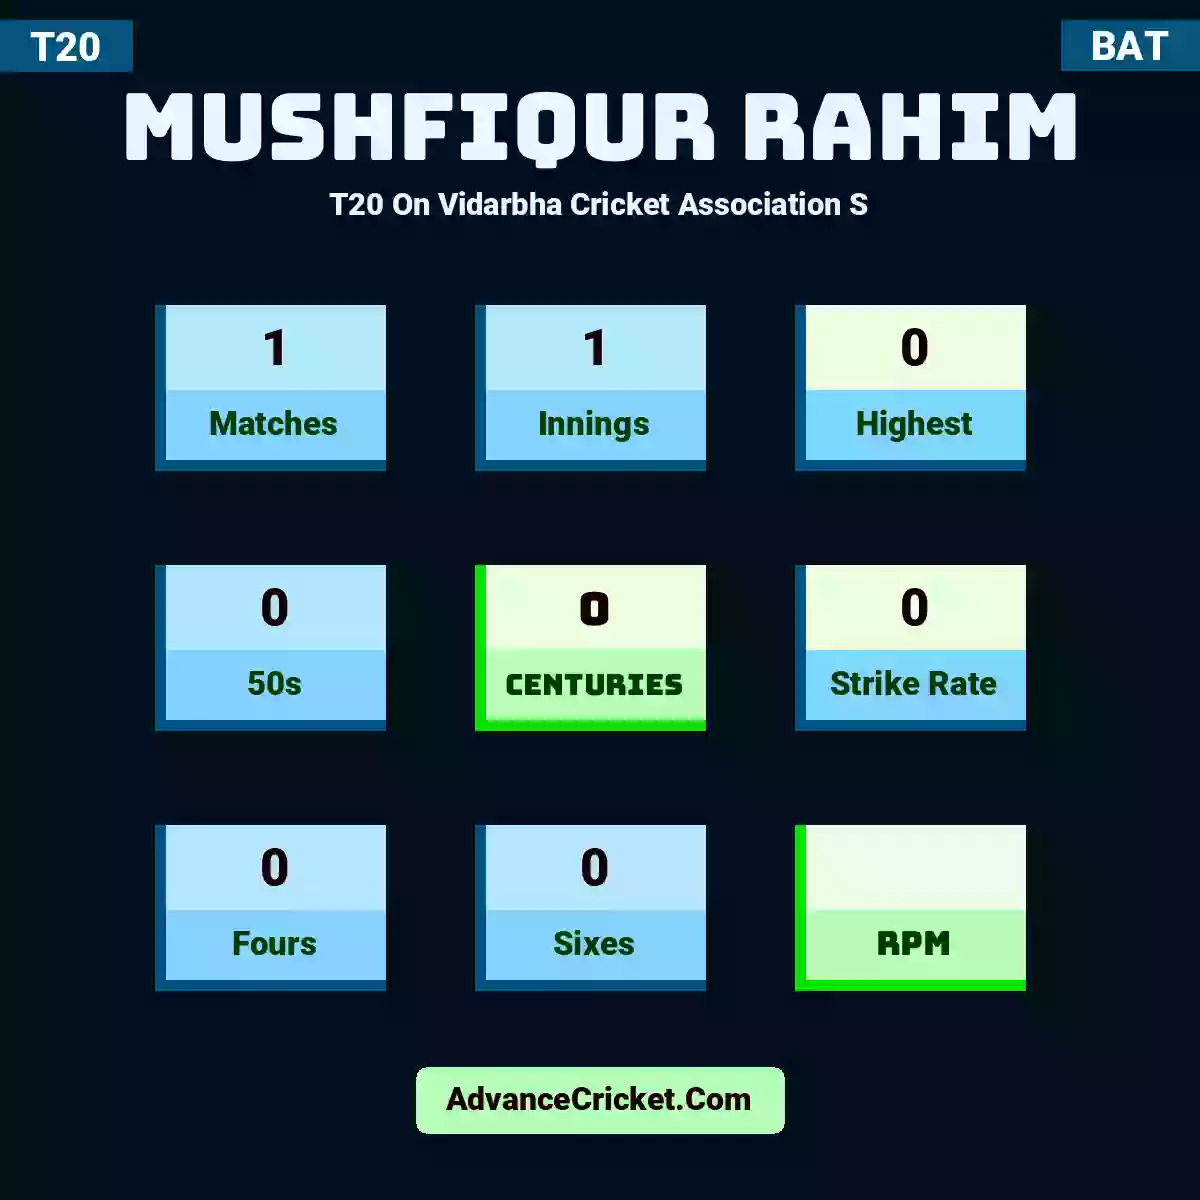 Mushfiqur Rahim T20  On Vidarbha Cricket Association S, Mushfiqur Rahim played 1 matches, scored 0 runs as highest, 0 half-centuries, and 0 centuries, with a strike rate of 0. M.Rahim hit 0 fours and 0 sixes.